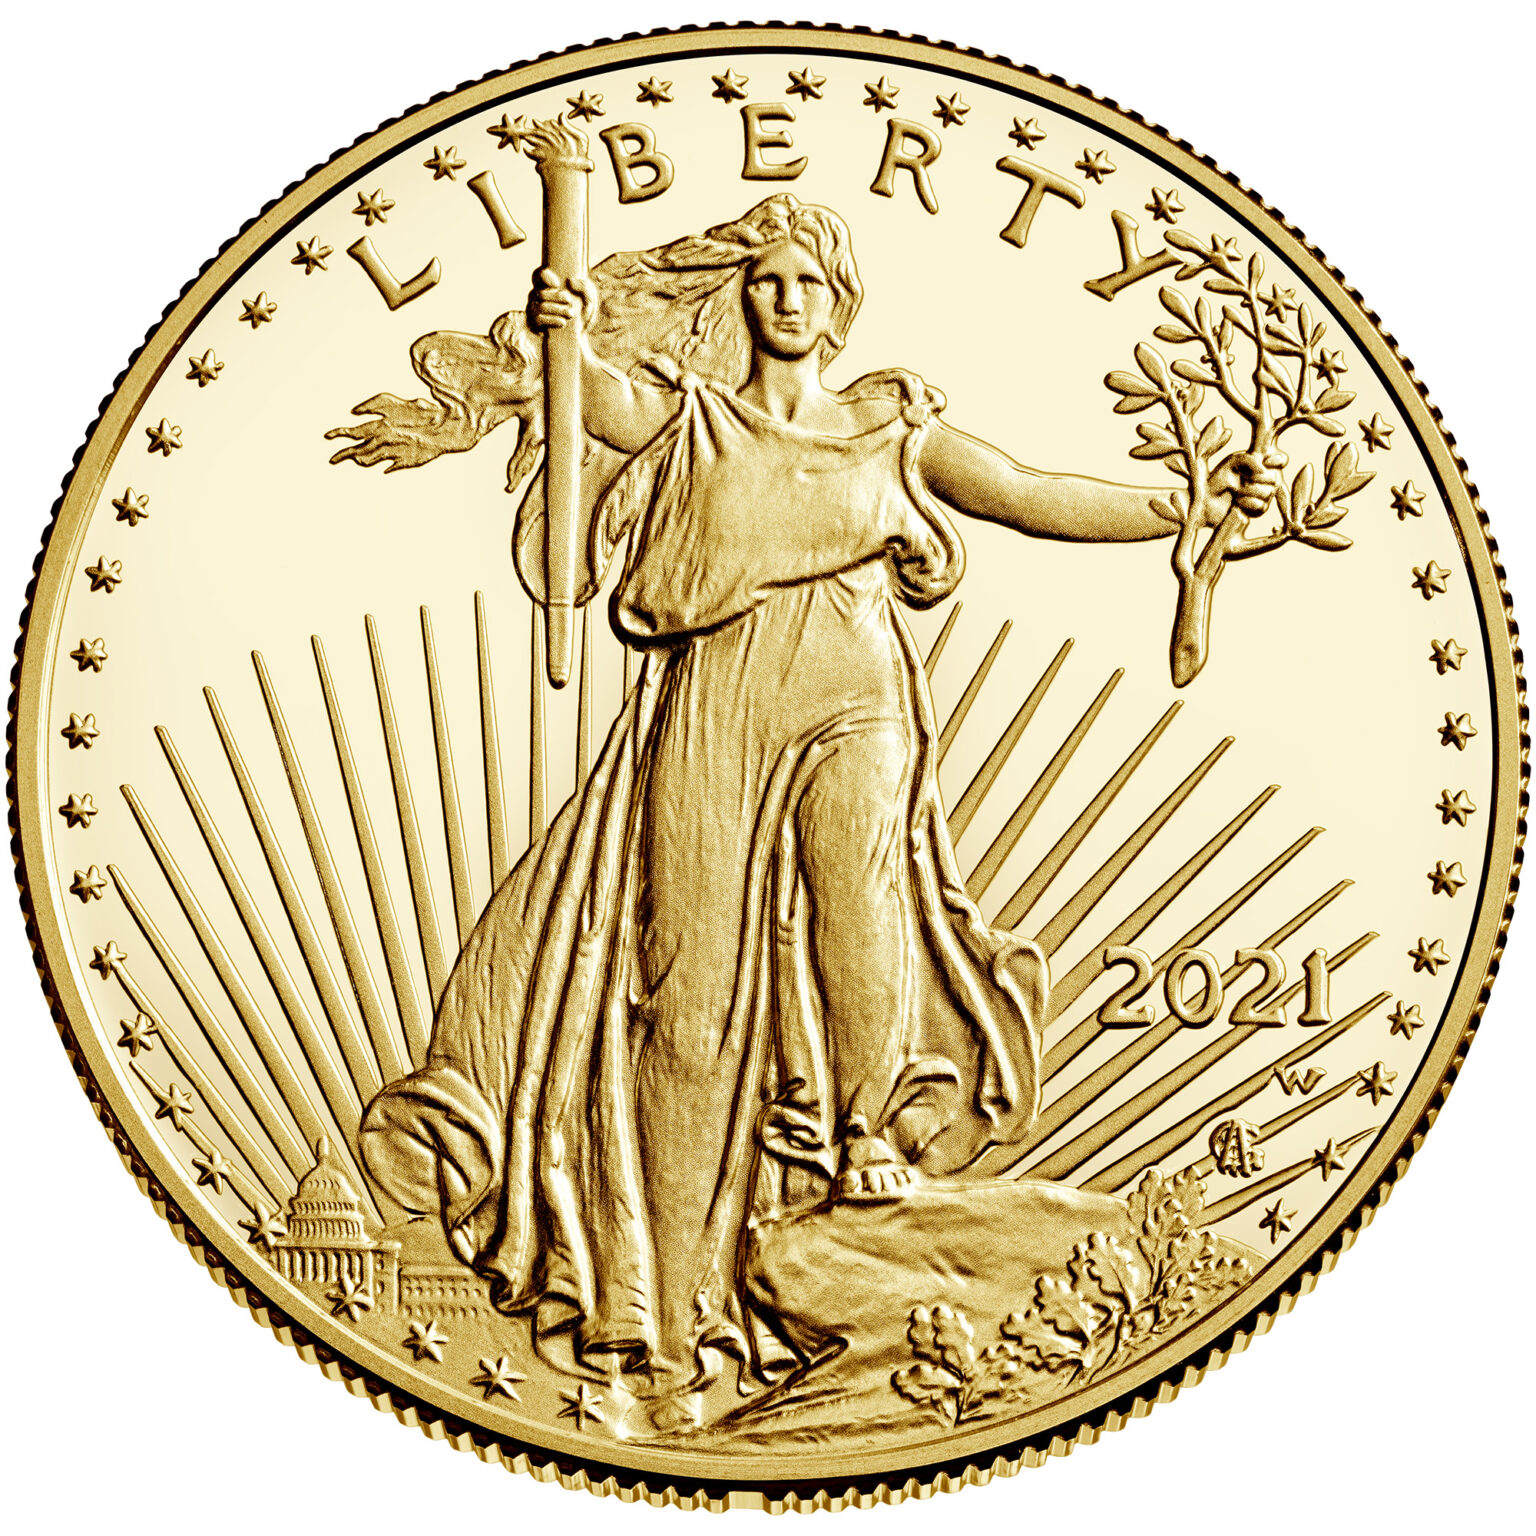 American eagle coin value